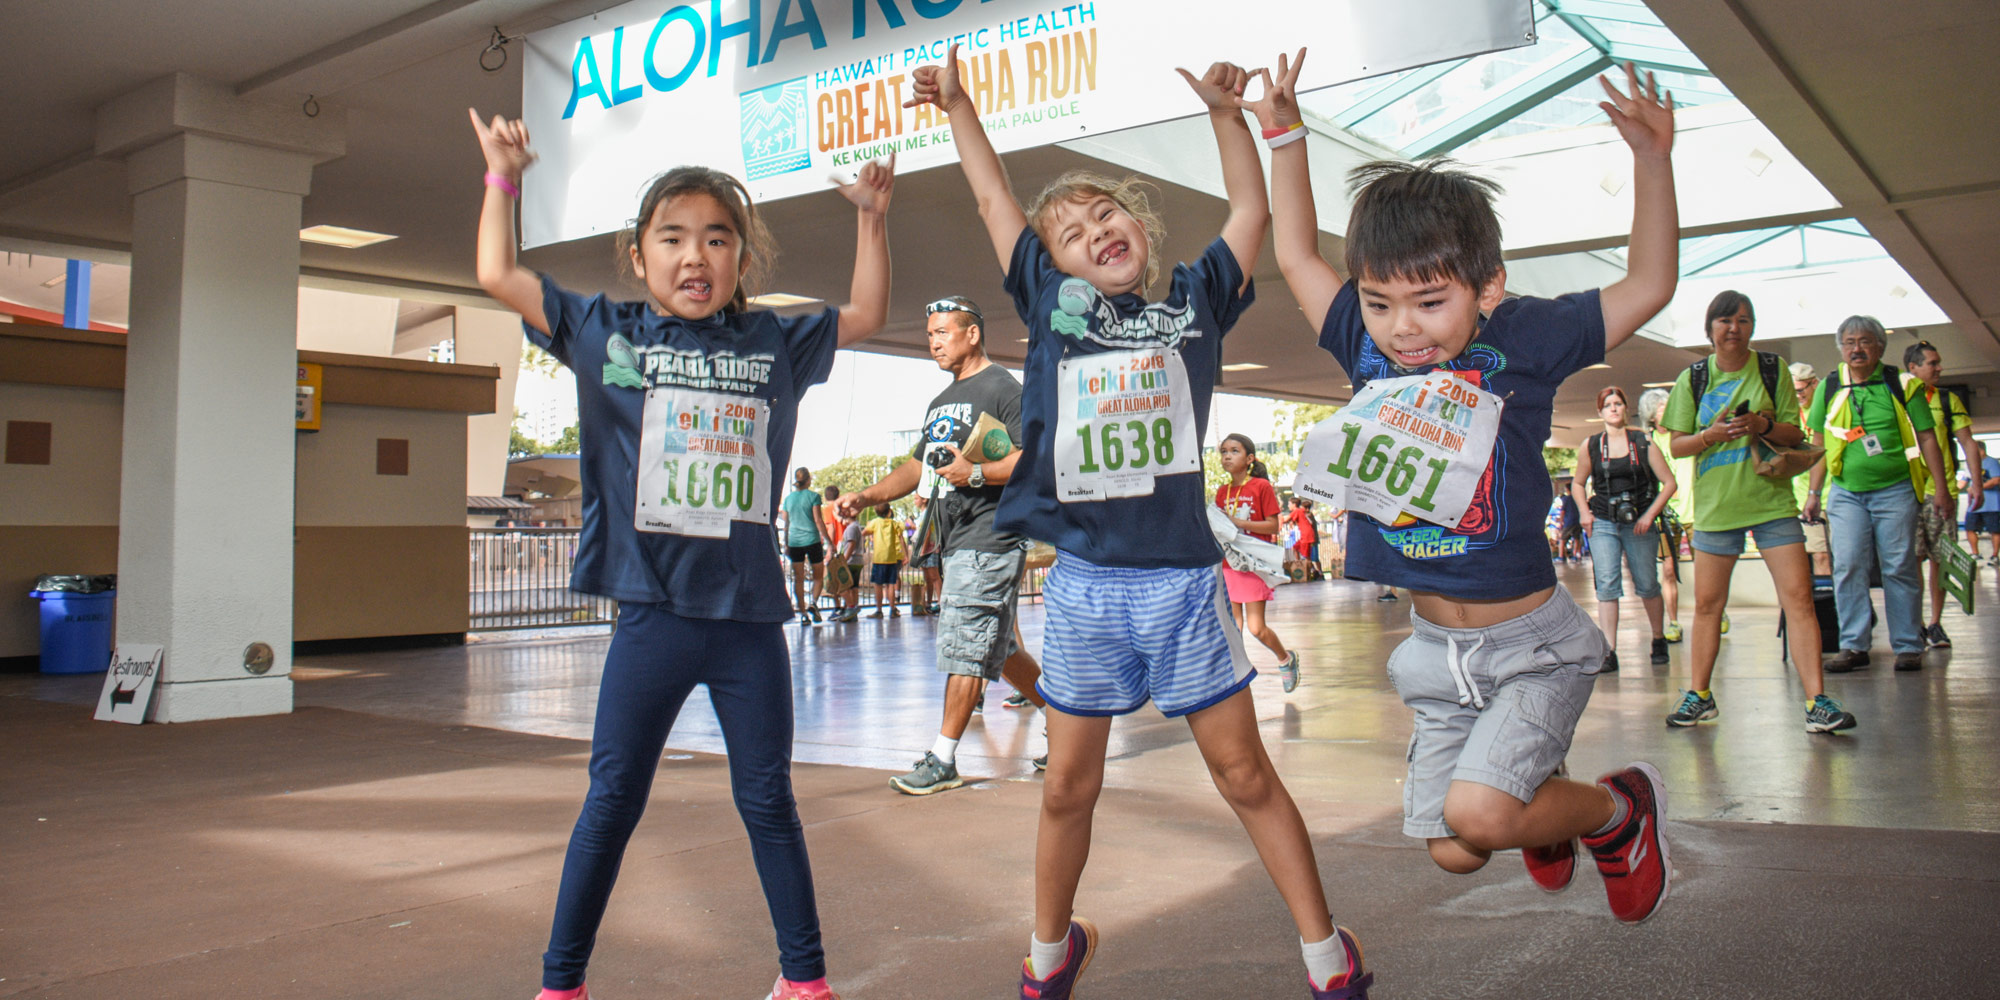 Hawaii Pacific Health Great Aloha Run Sports, Health & Fitness Expo